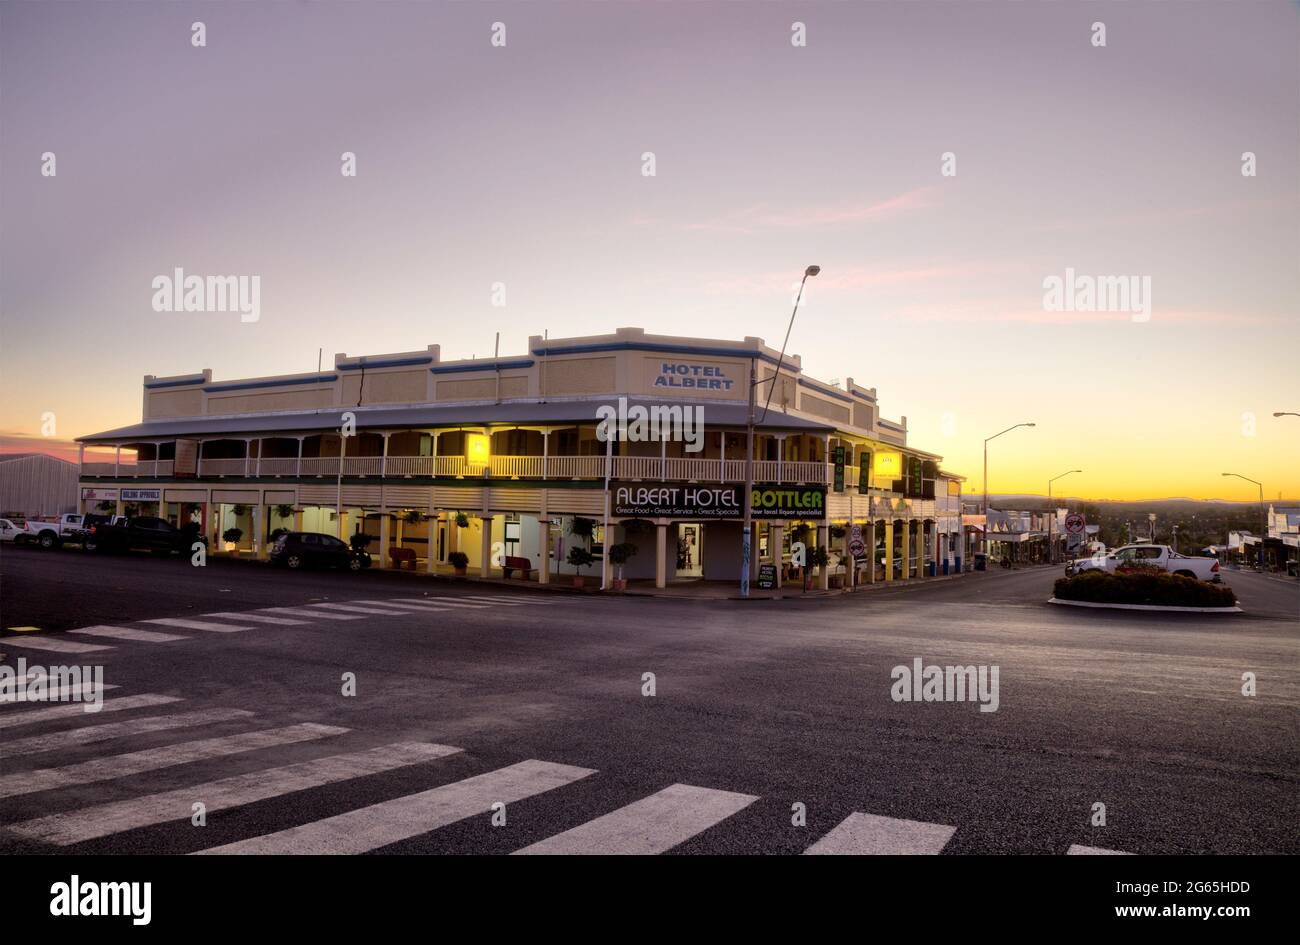 Sunset over the historic Hotel Albert Monto North Burnett Queensland Australia Stock Photo